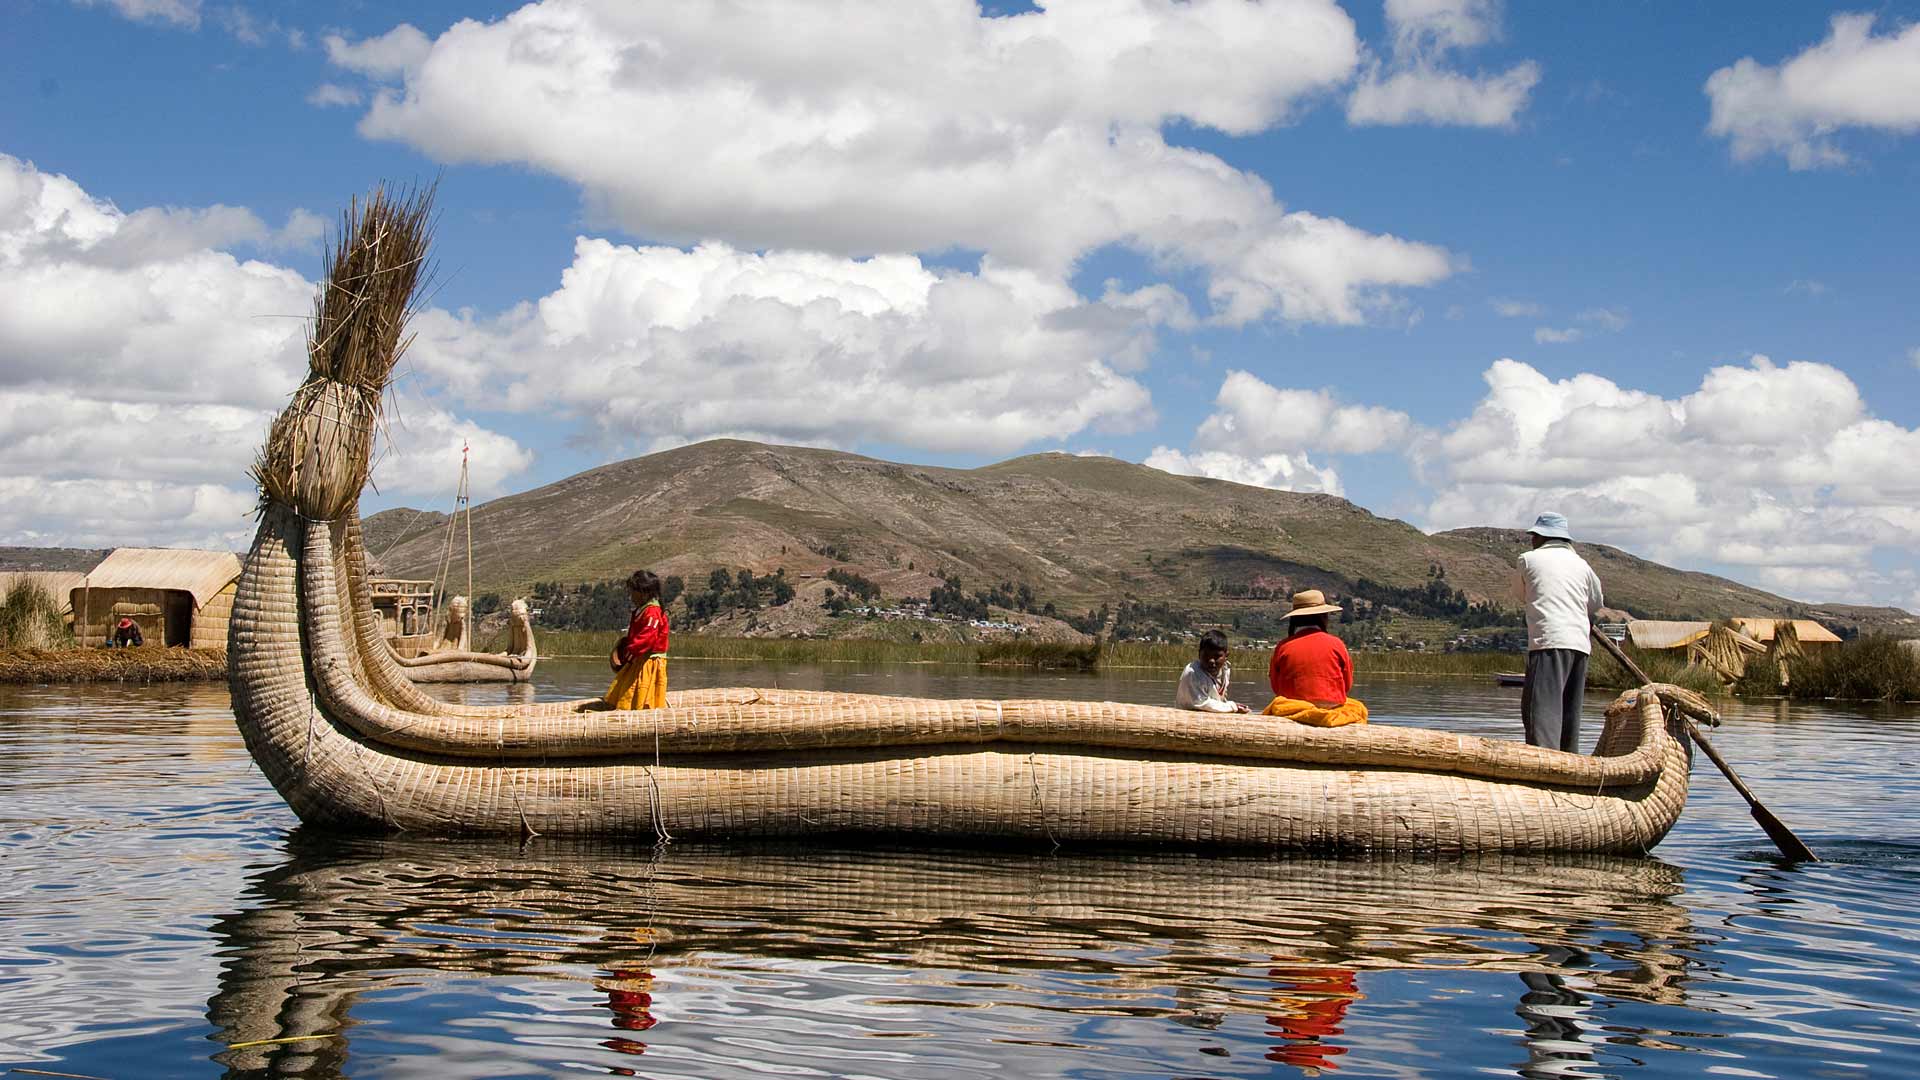 Uro people on board a totora (hollow reed) boat on Lake Titicaca, near Puno